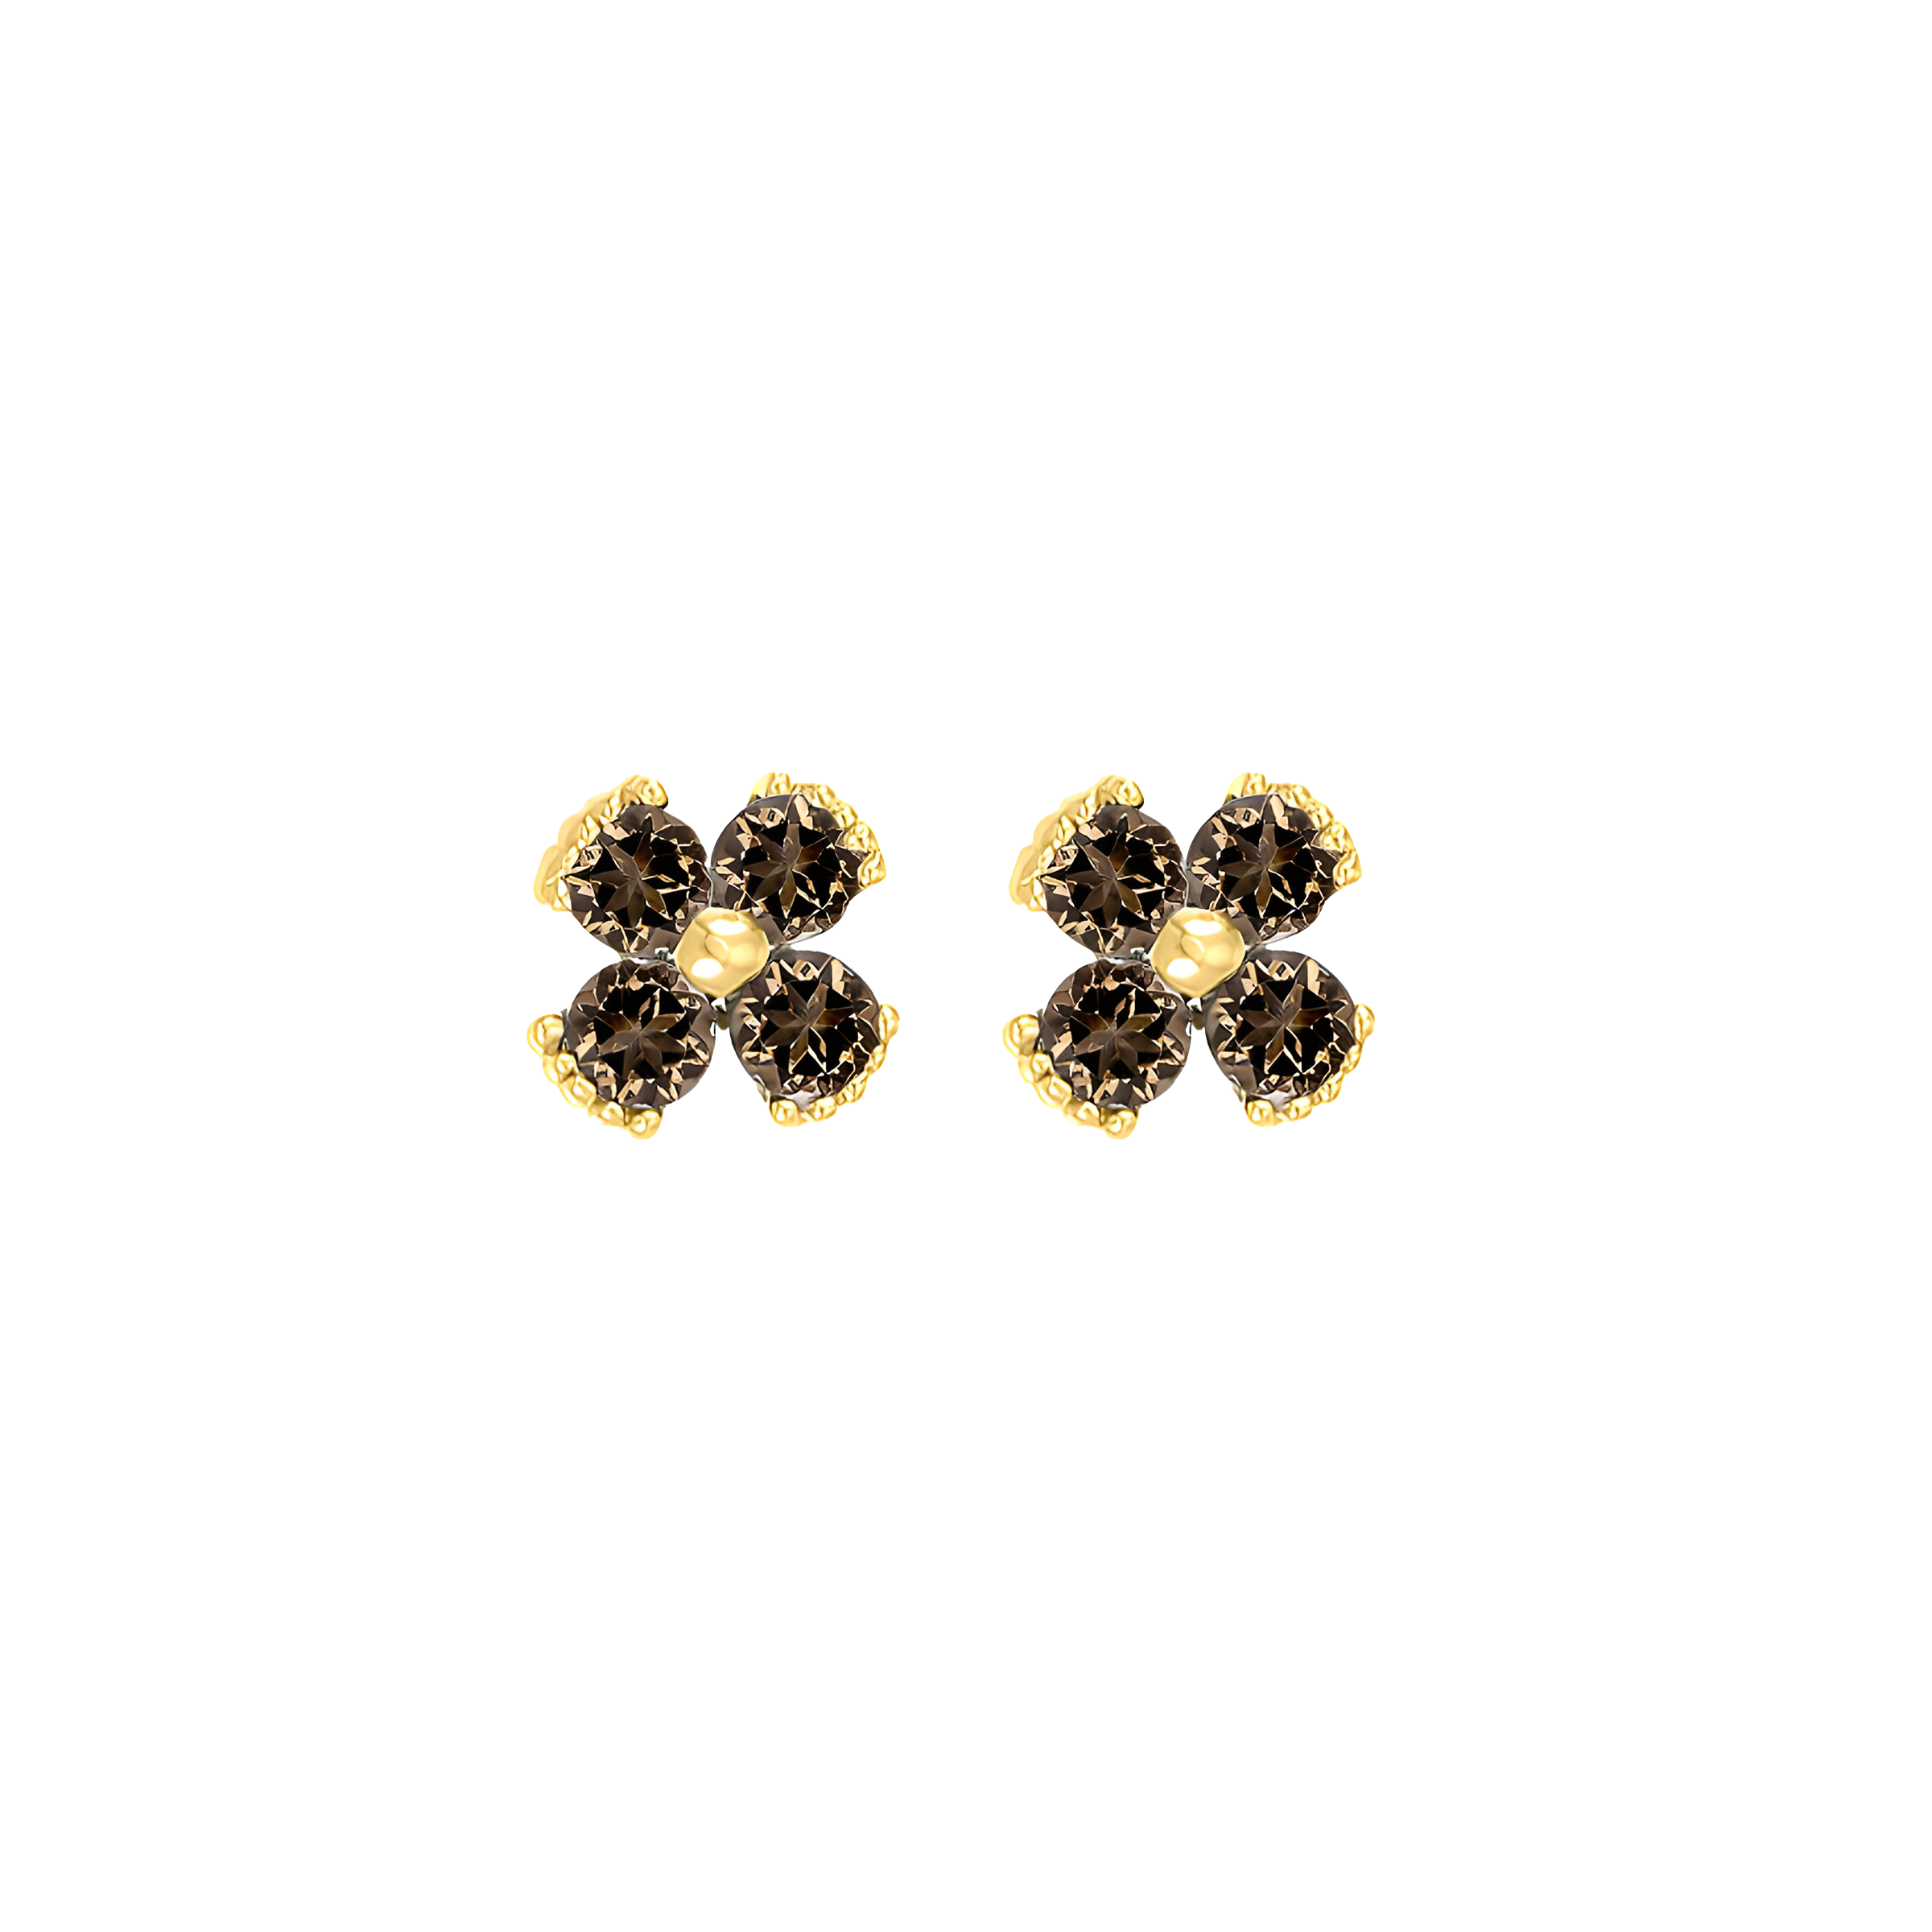 Dainty Floral Smoky Quartz Stud Earrings in 18k Yellow Gold